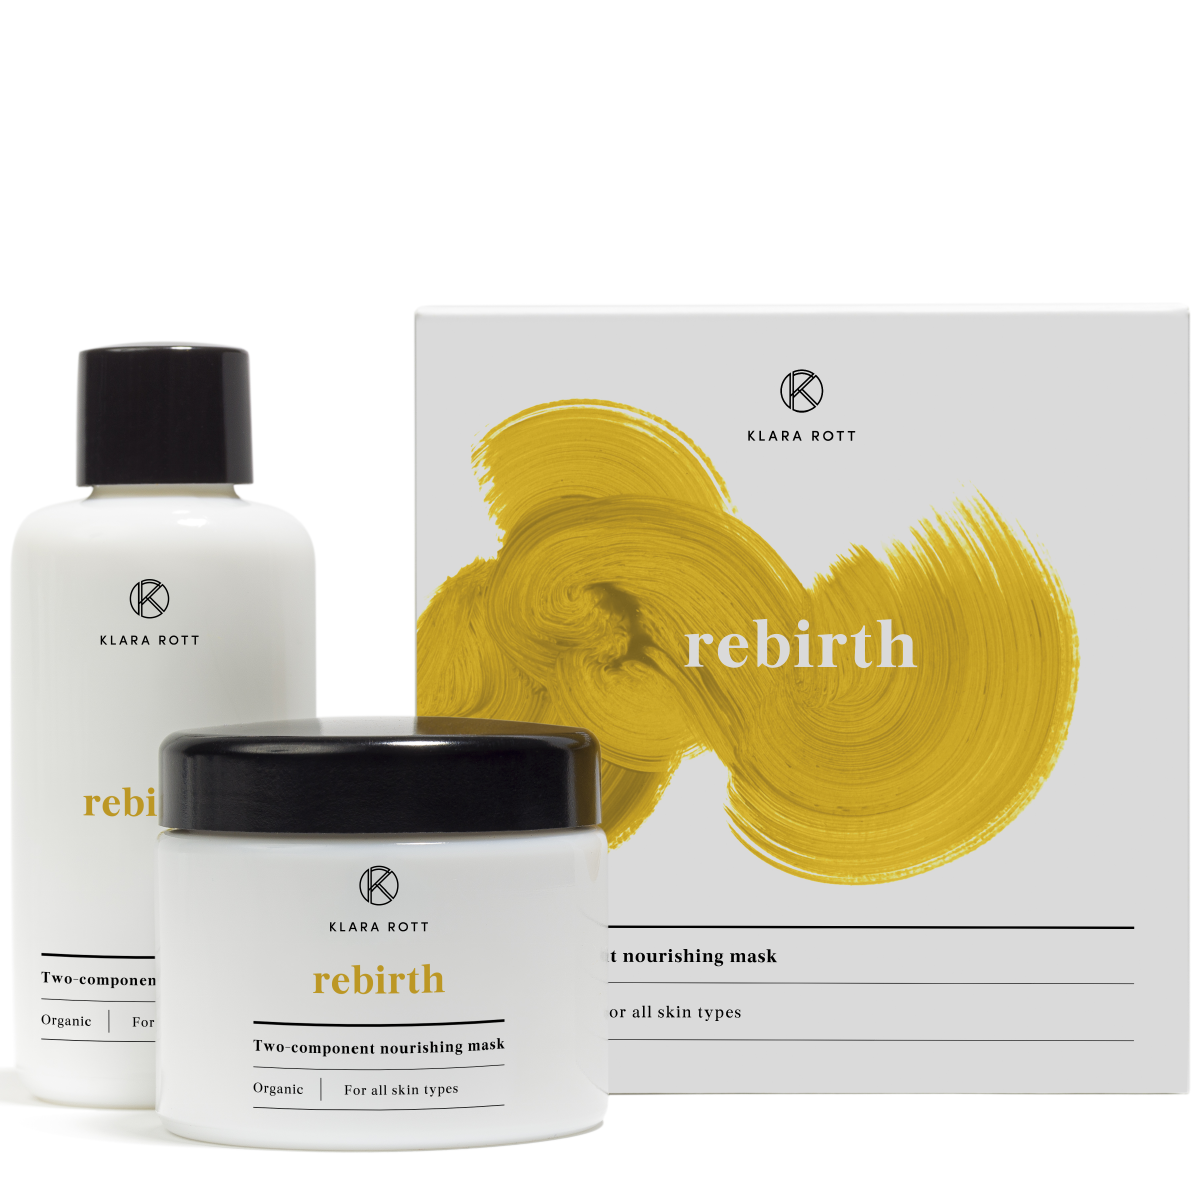 Rebirth - Two-component nourishing mask 